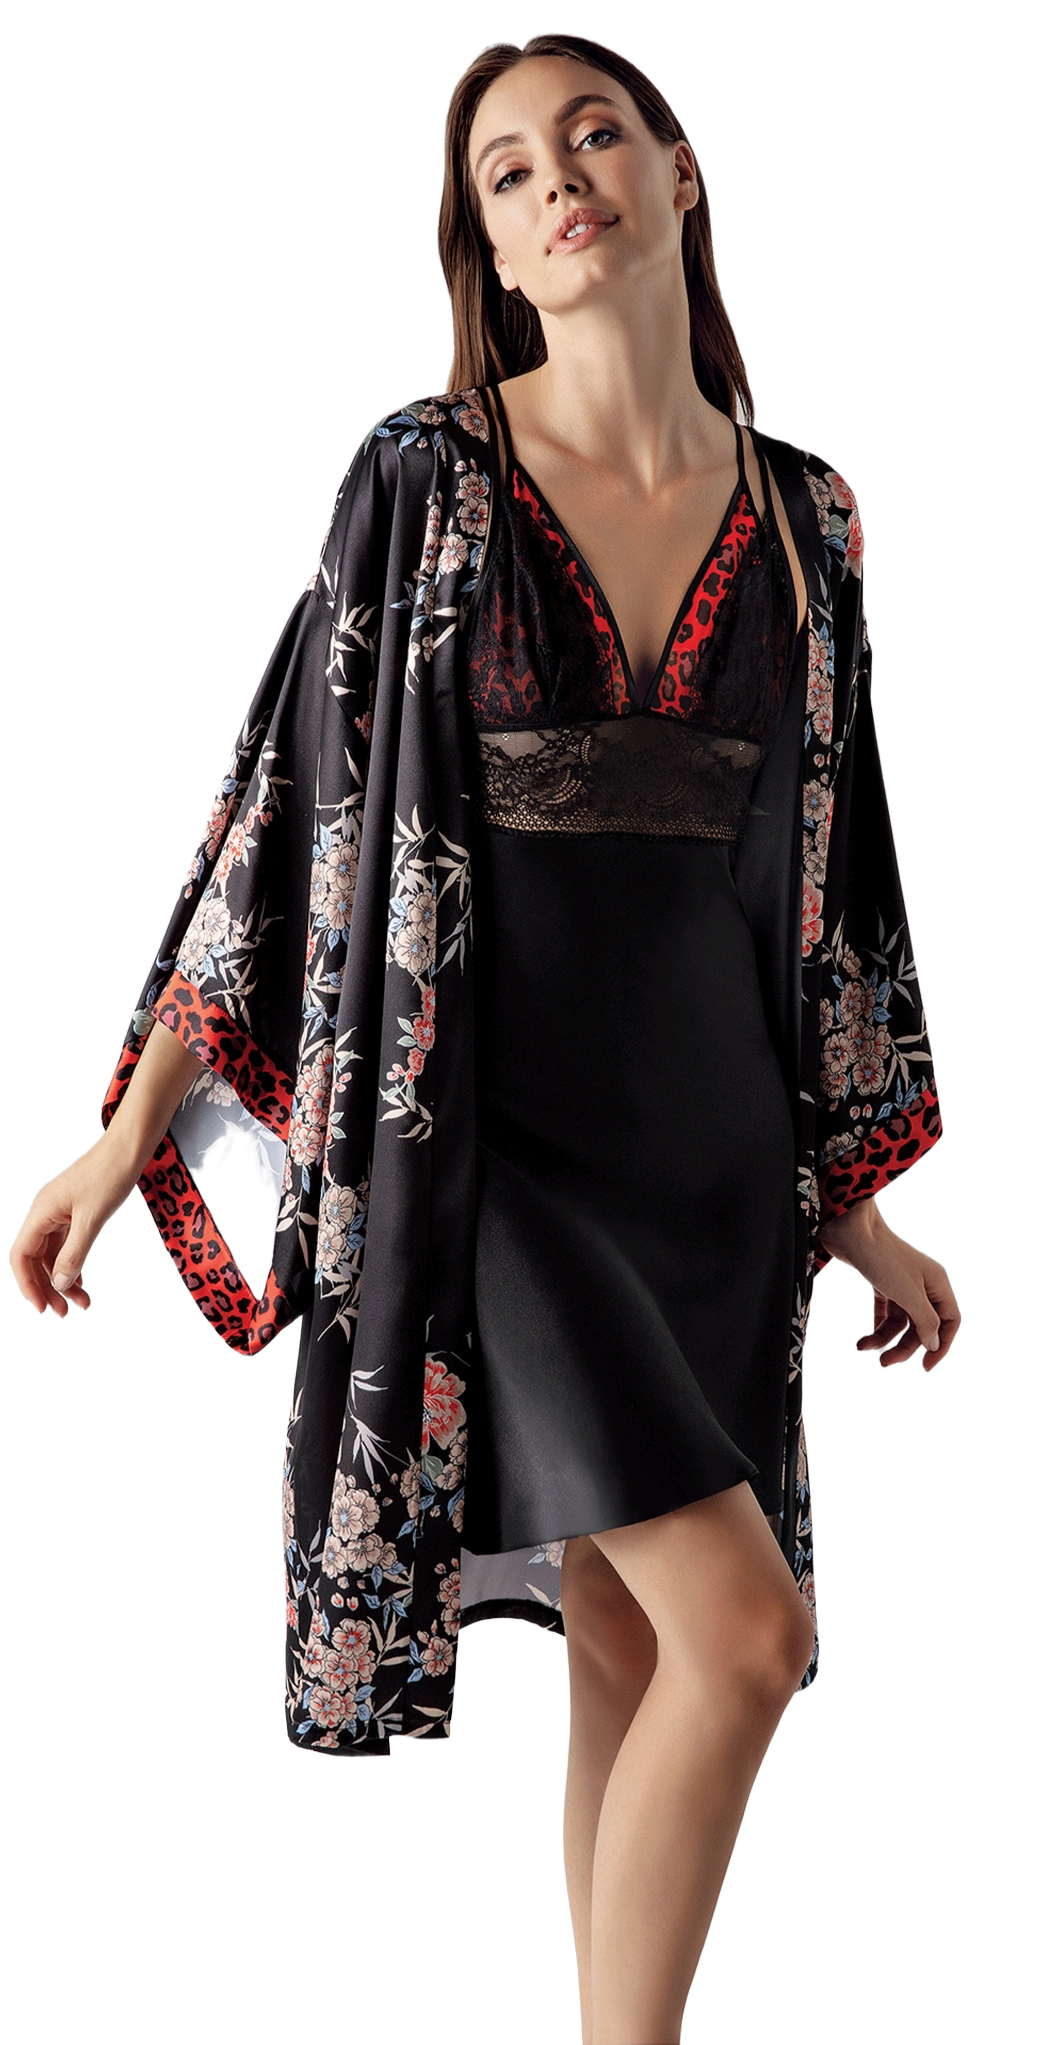 AmoreXY Women's Sleep & Lounge Robe Set | Satin Black Floral with Lace & Lining Bra